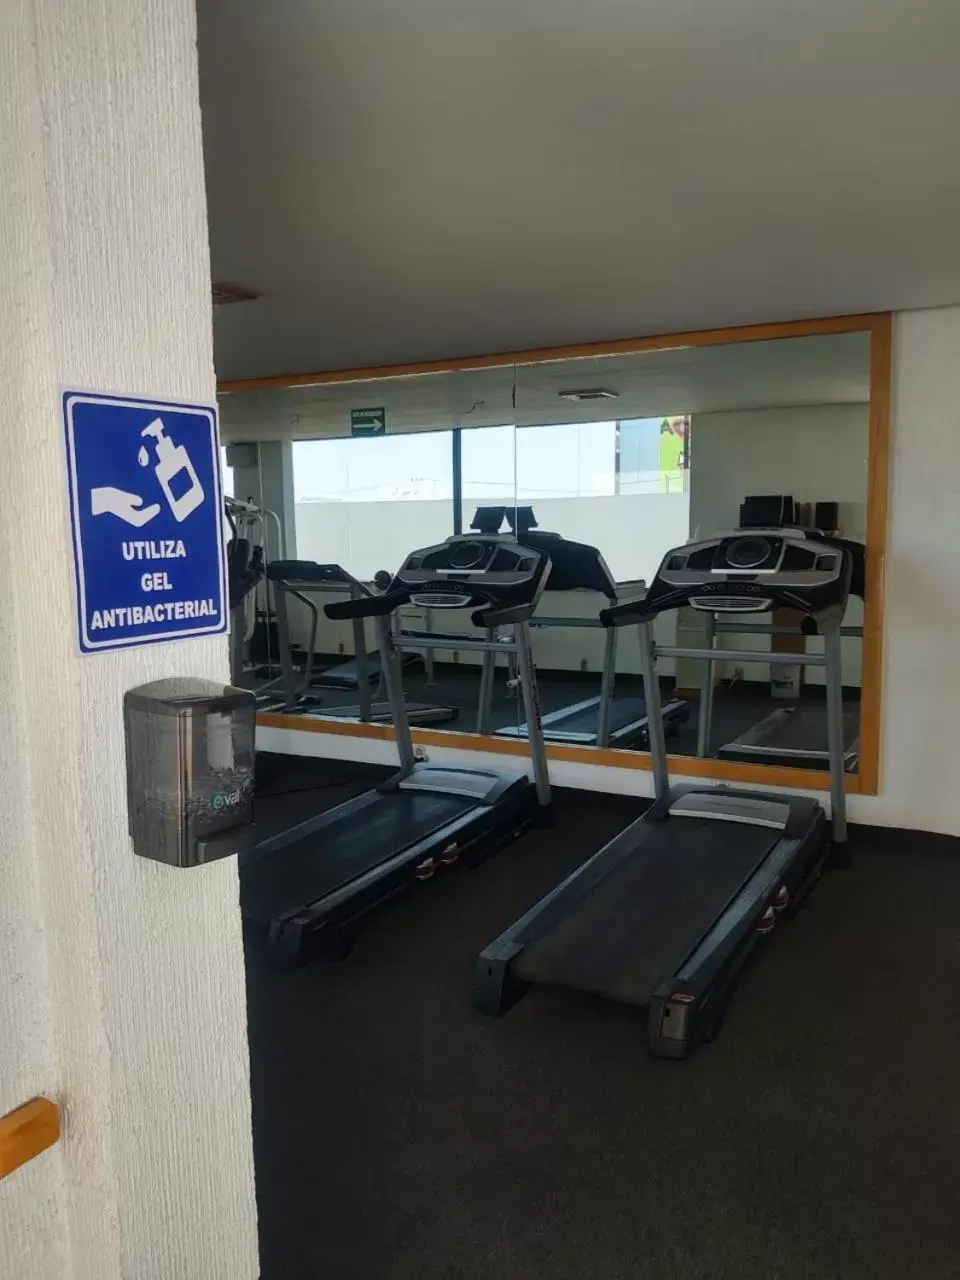 Fitness centre/facilities, Fitness Center/Facilities in Hotel Alcampo